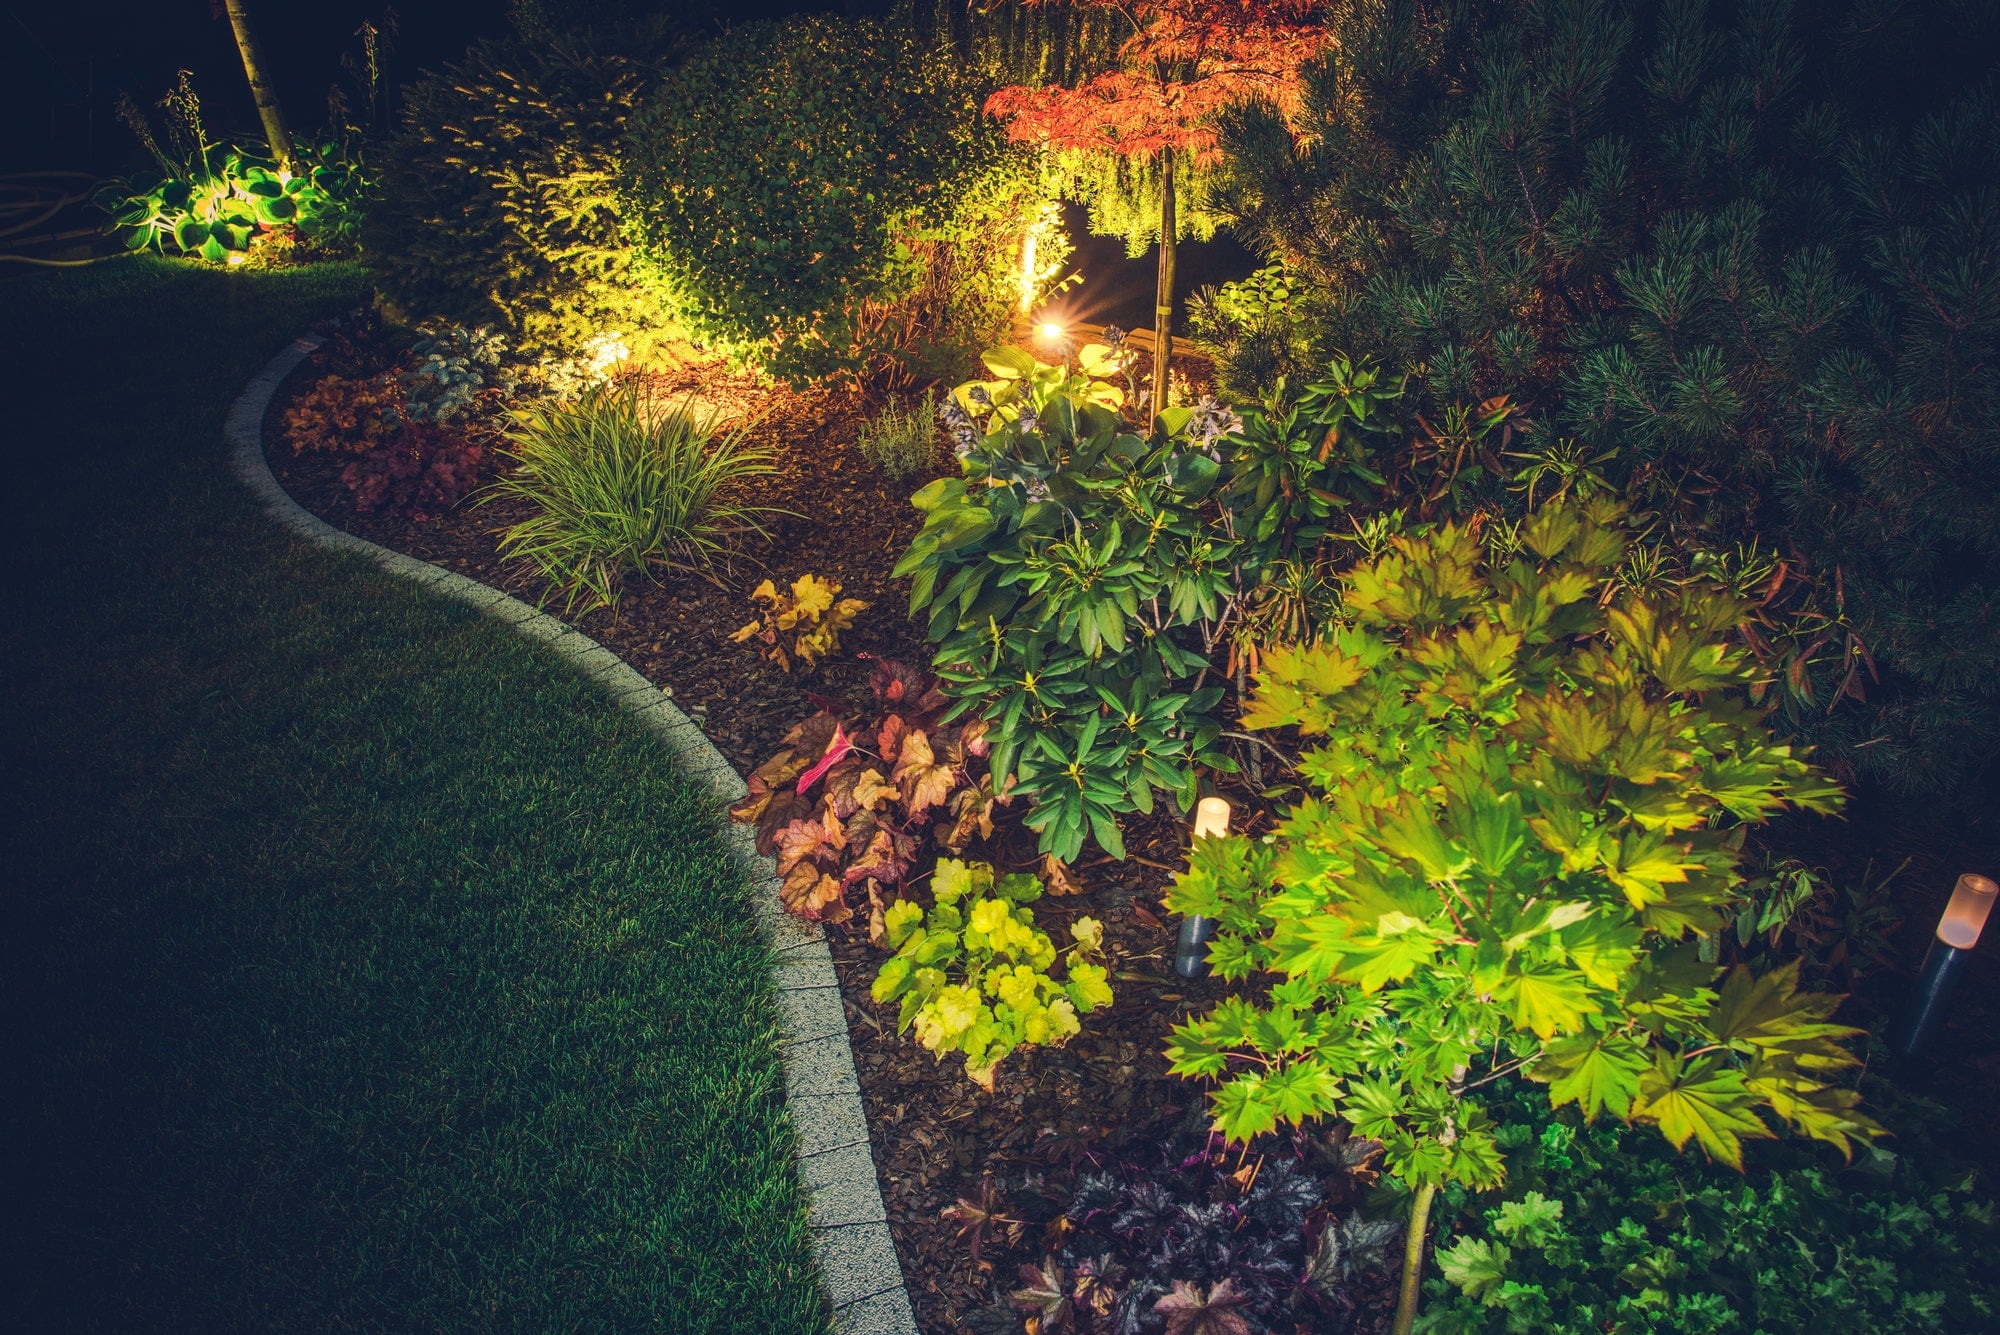 Illuminated Backyard Garden in des moines iowa